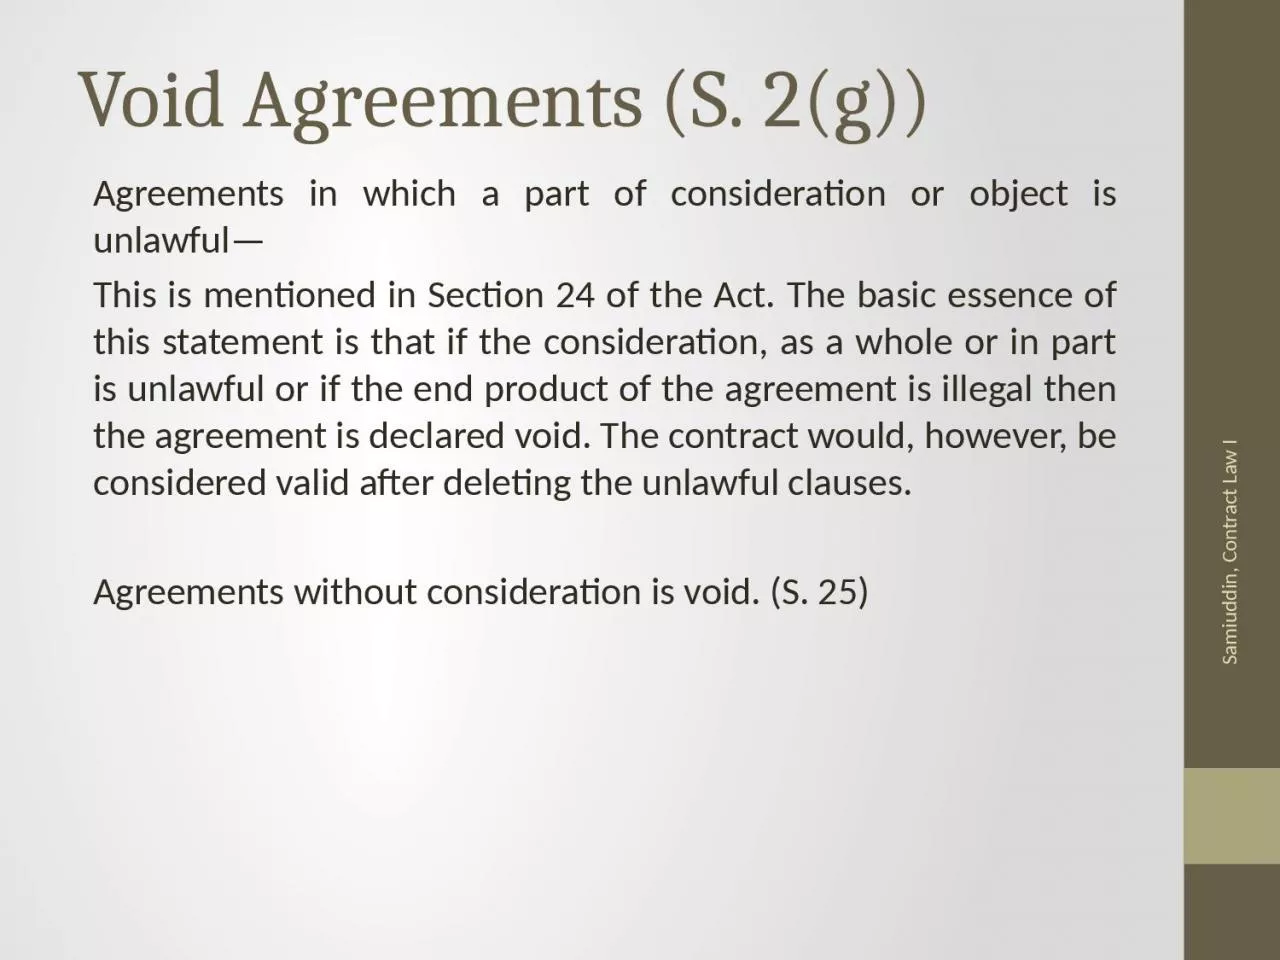 Void Agreements (S. 2(g))